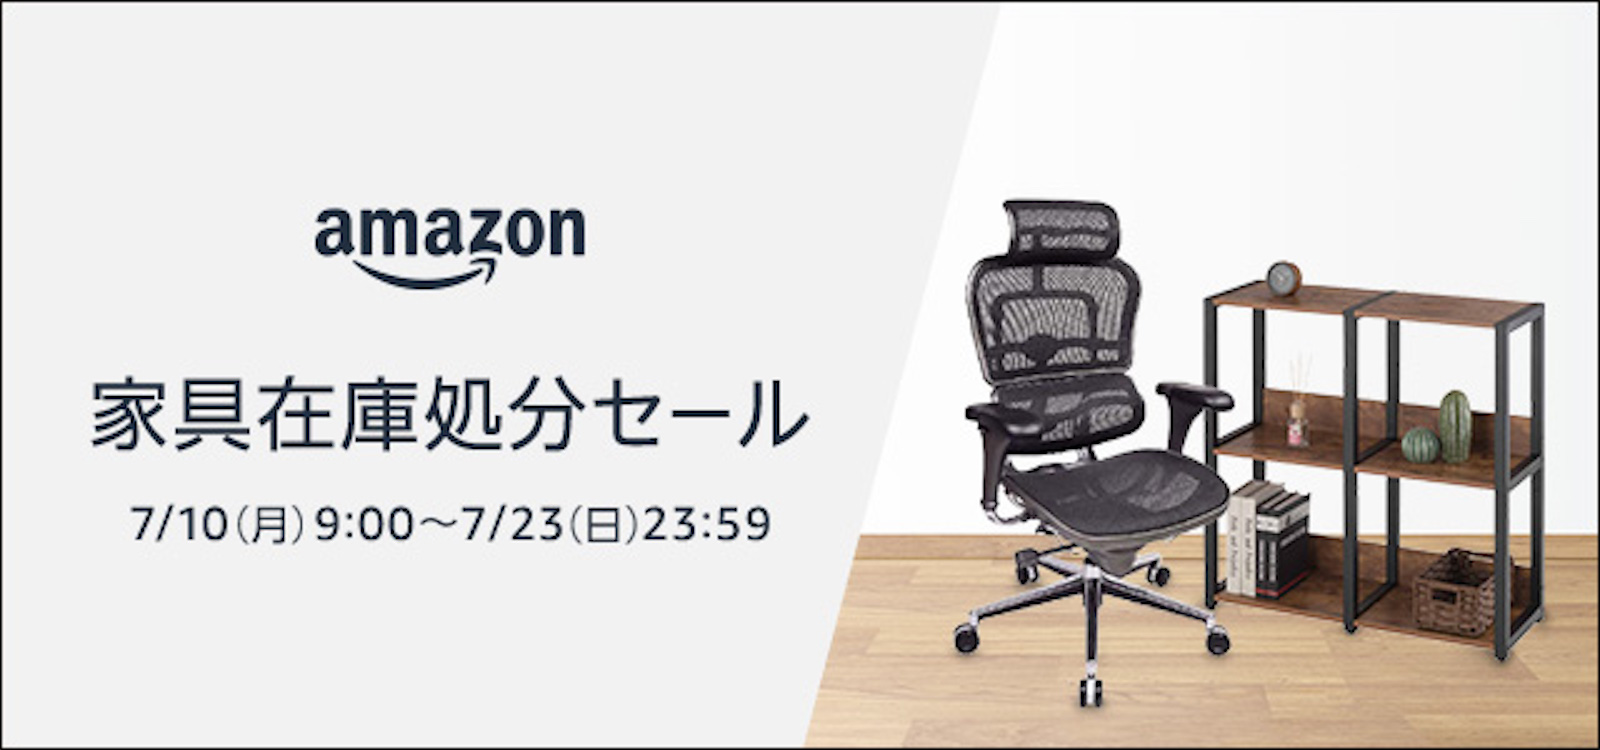 Amazon Kagu Zaiko Shobun Sale